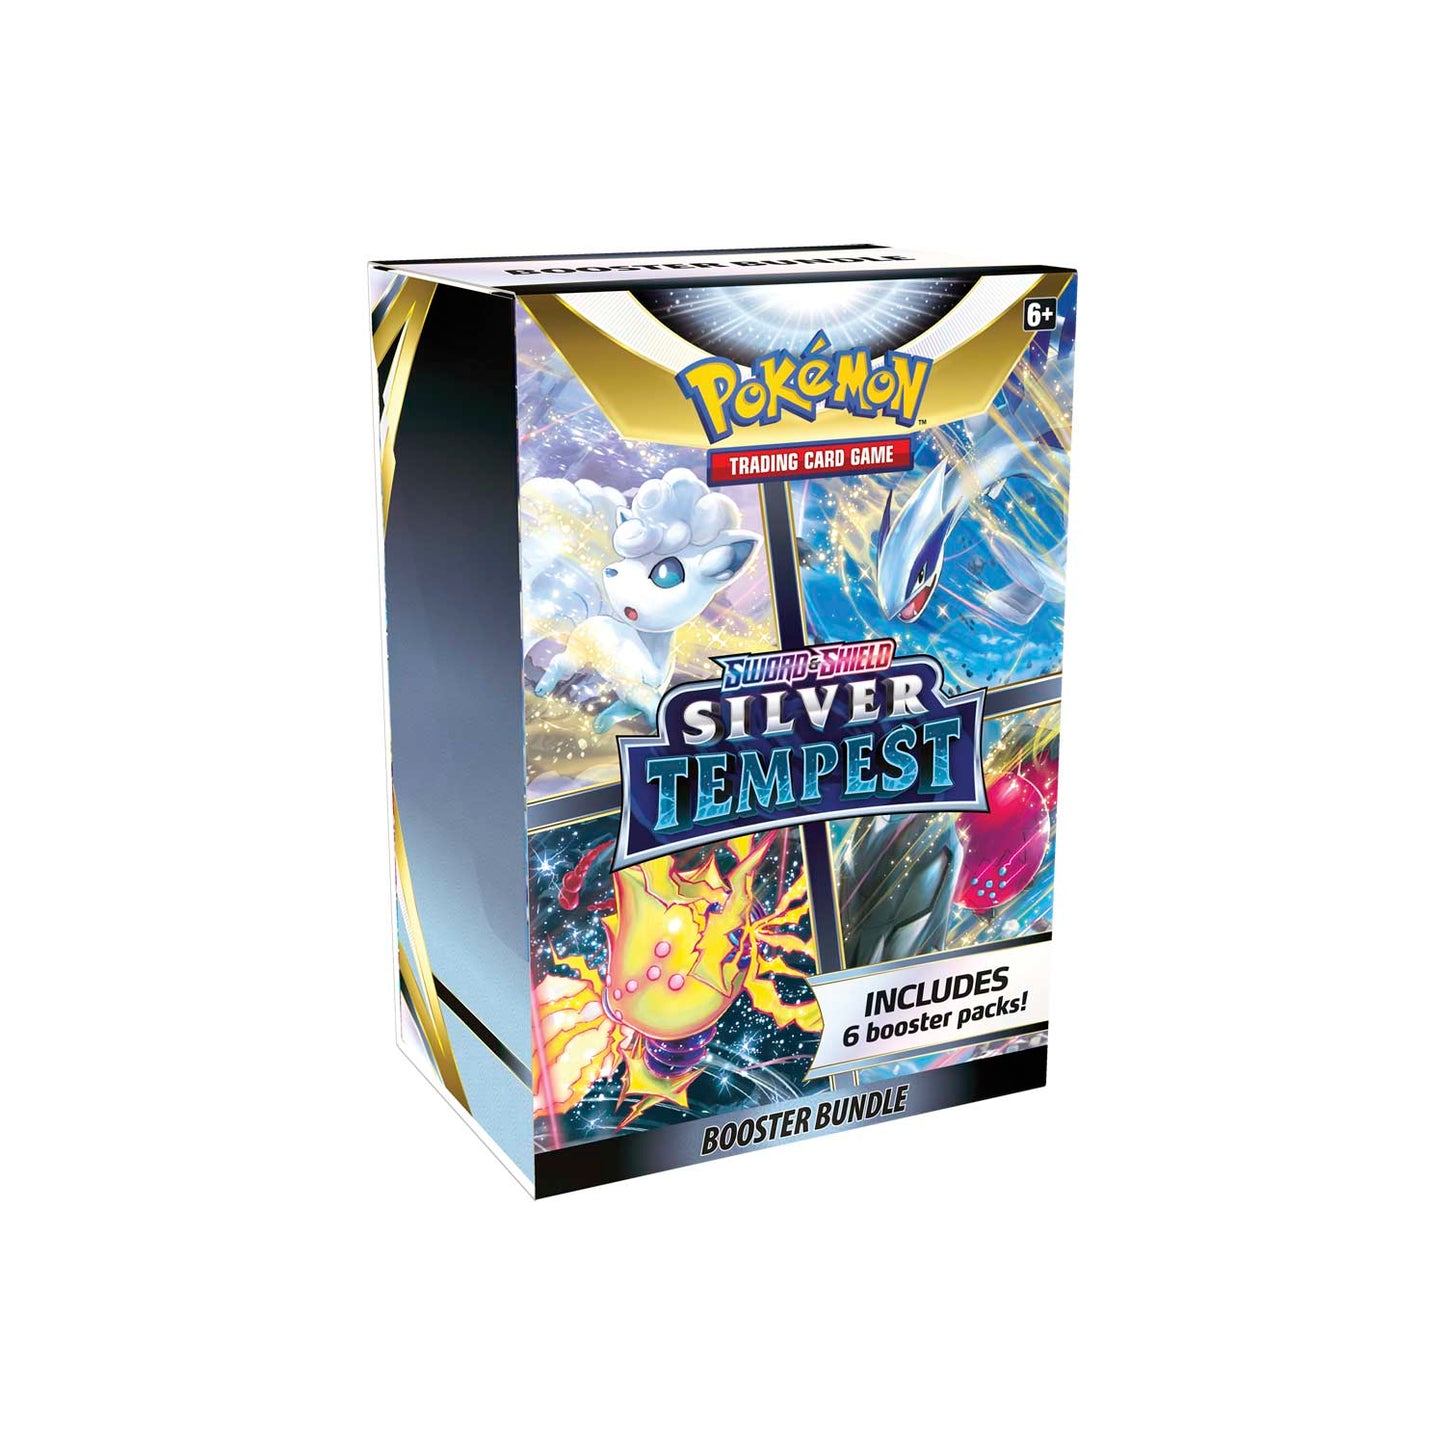 Pokémon - Silver Tempest Booster Bundle